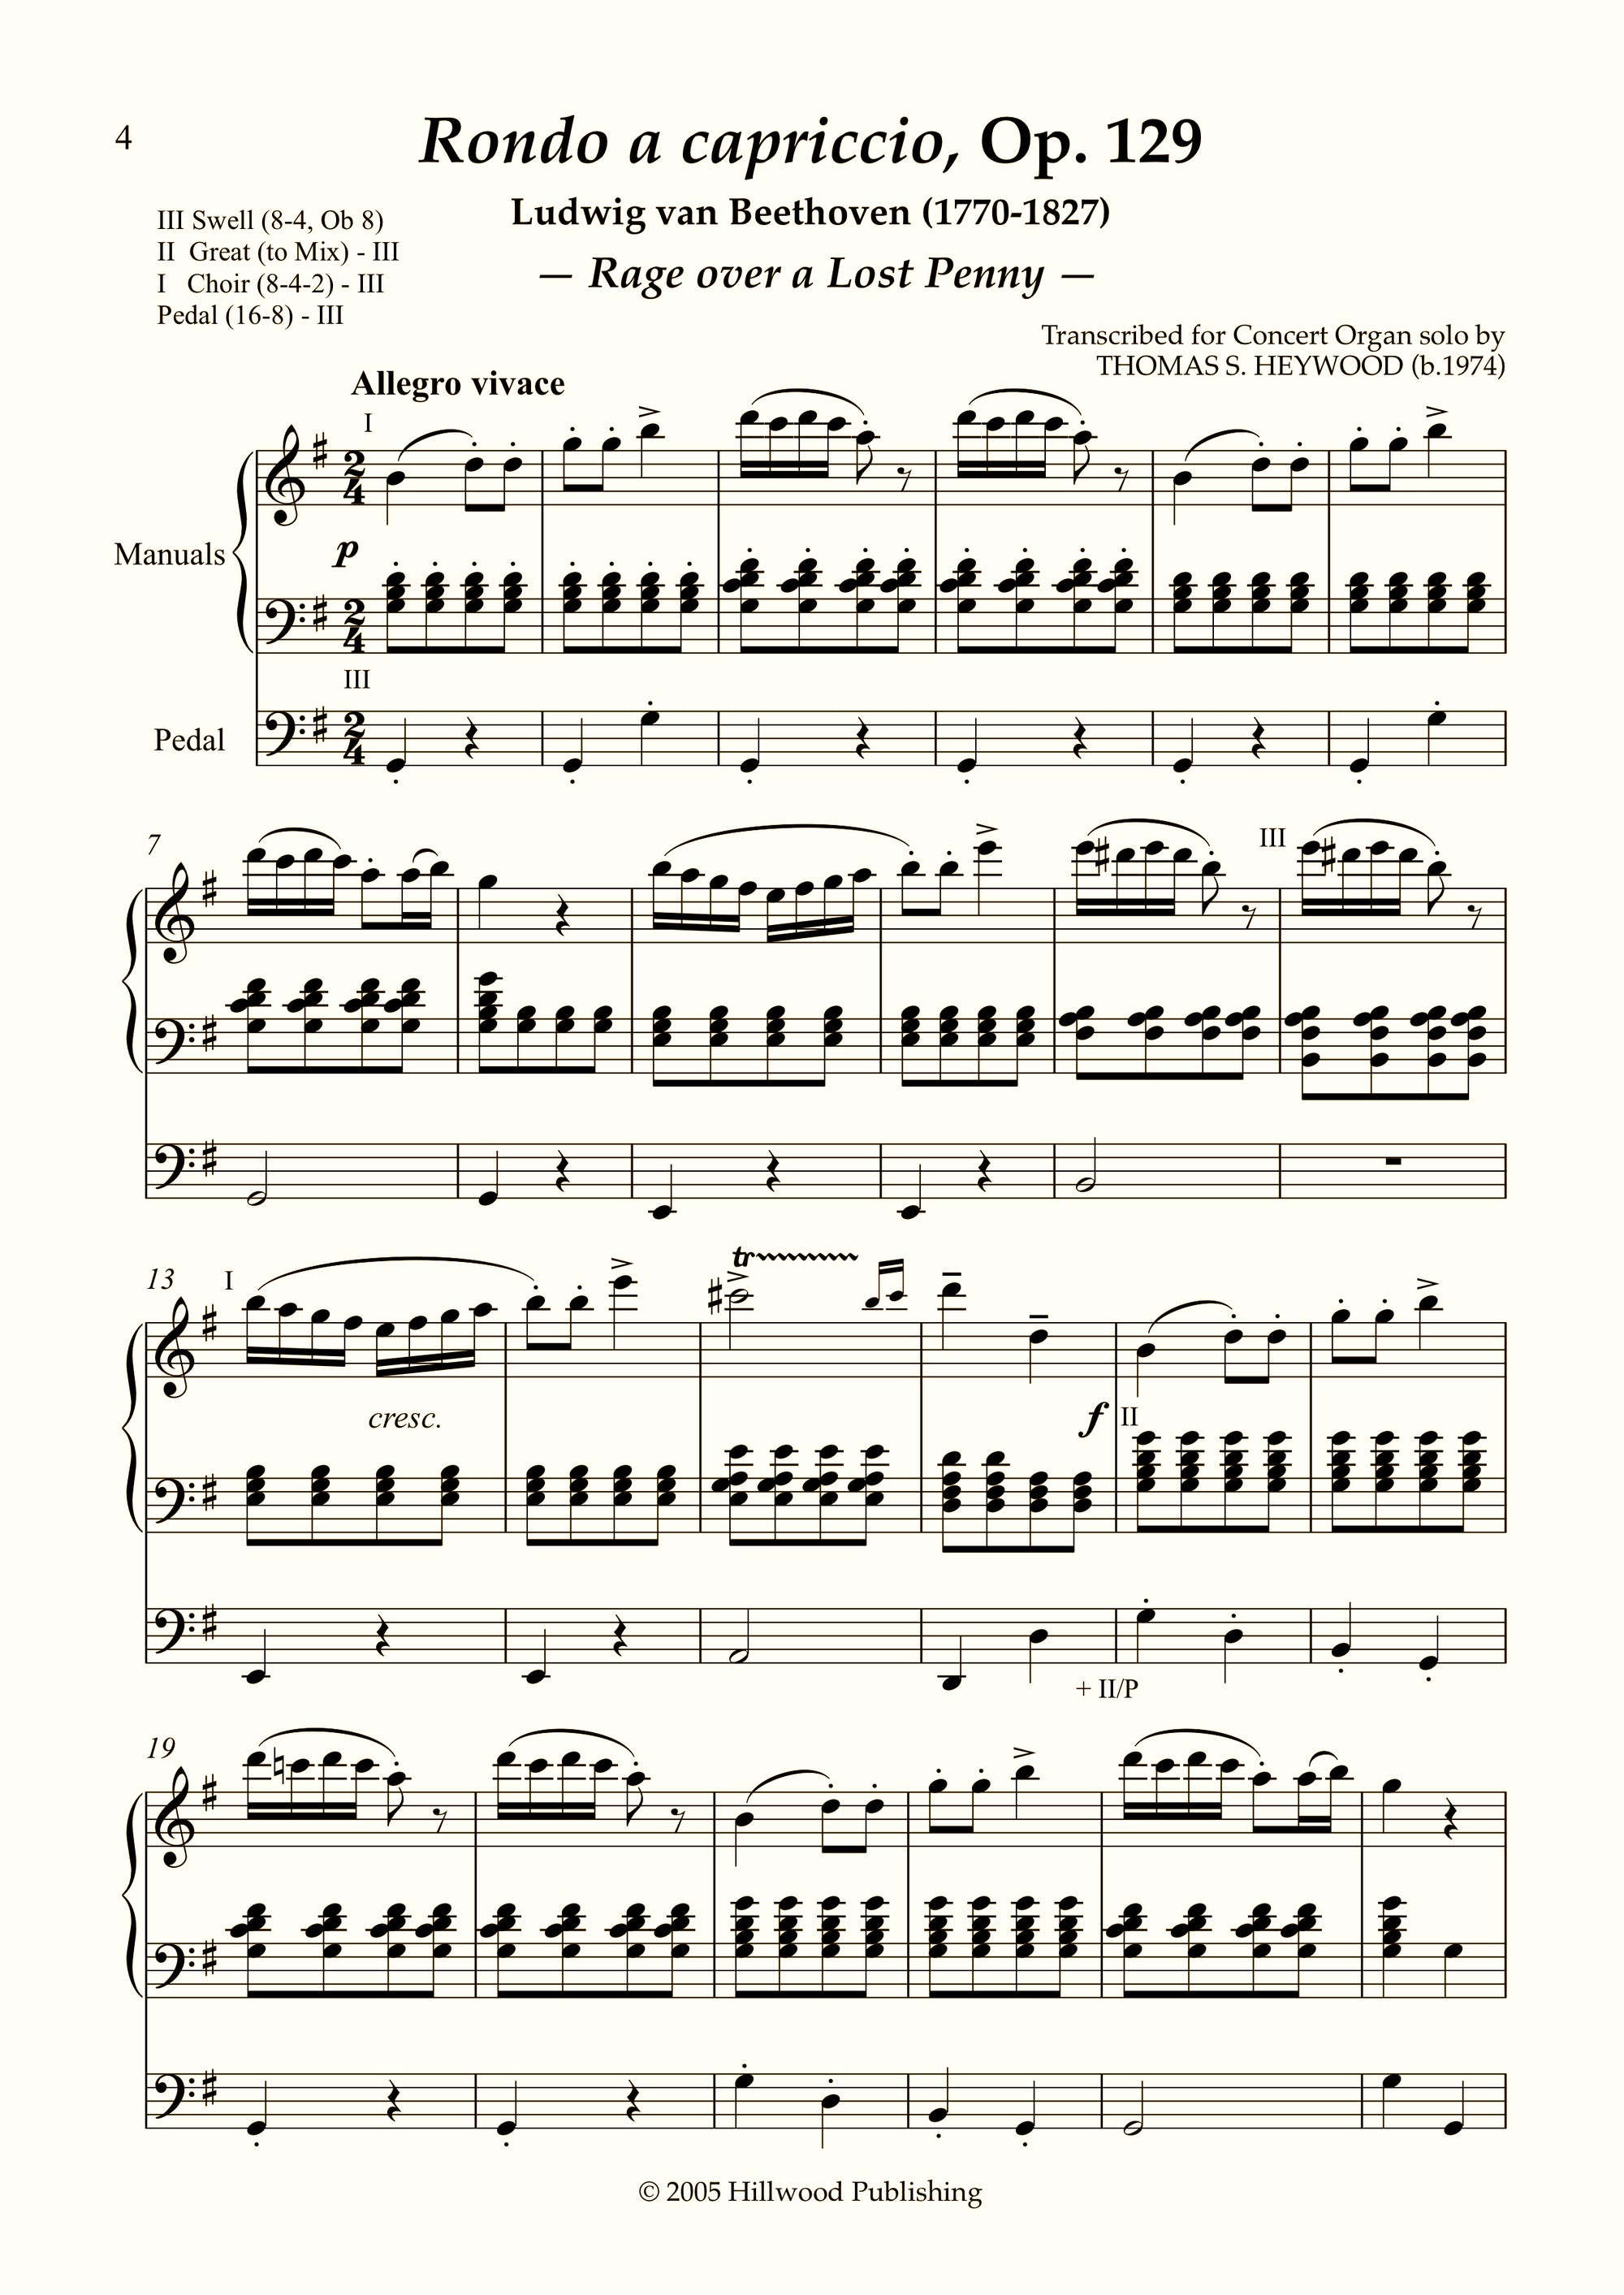 Beethoven/Heywood - Rondo a capriccio: 'Rage over a Lost Penny', Op. 129 (Score) | Thomas Heywood | Concert Organ International